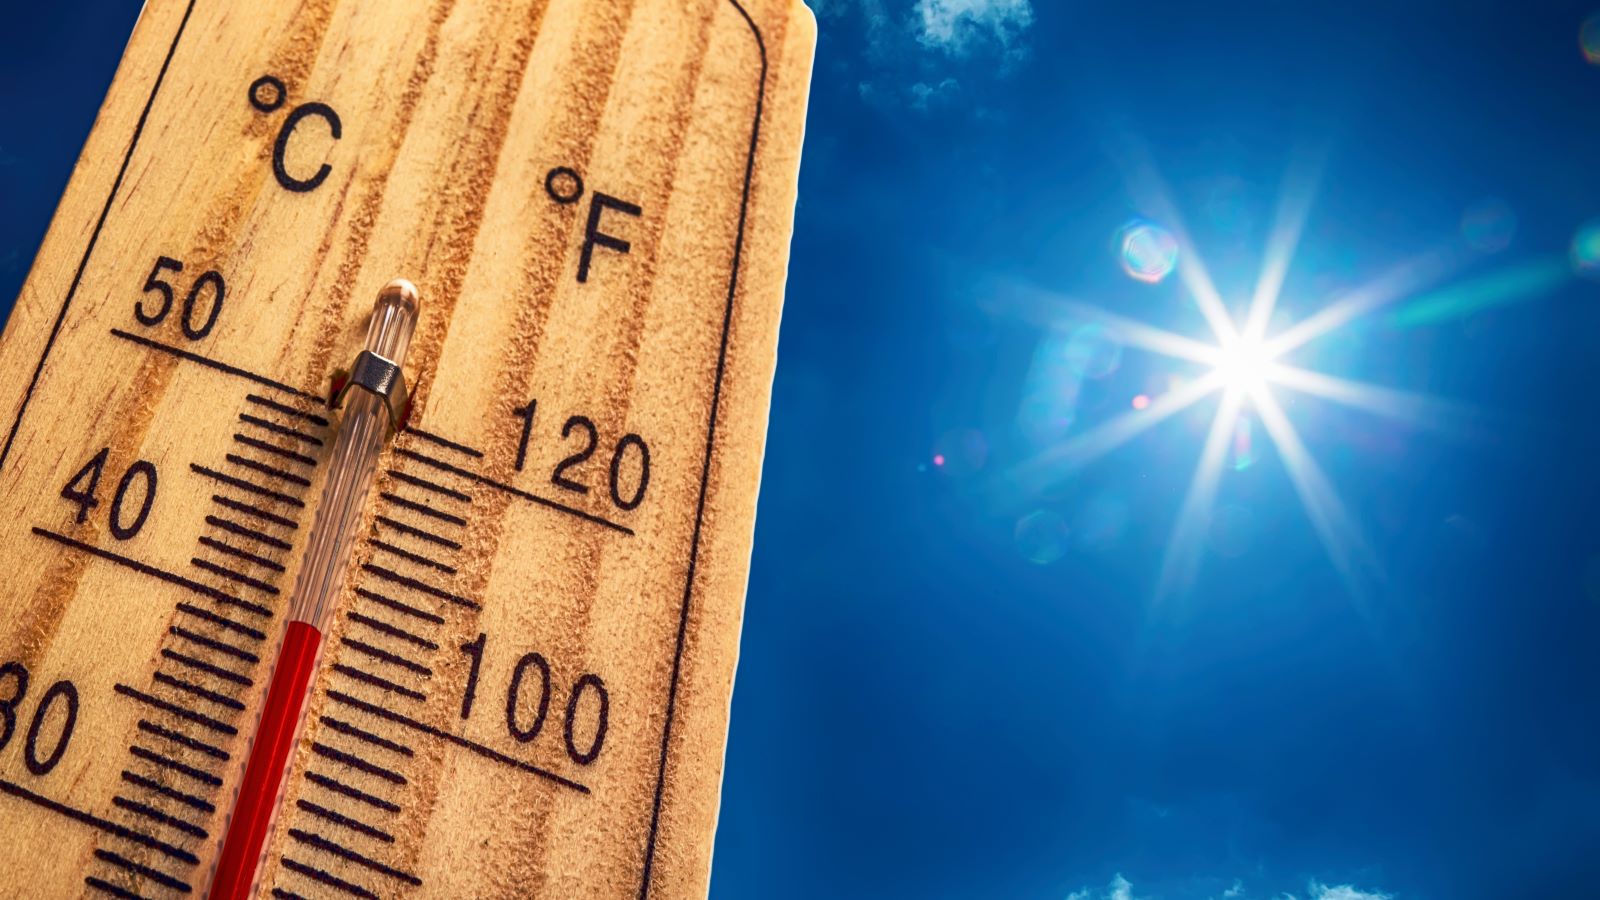 How Summer Heat Affects Your Heart